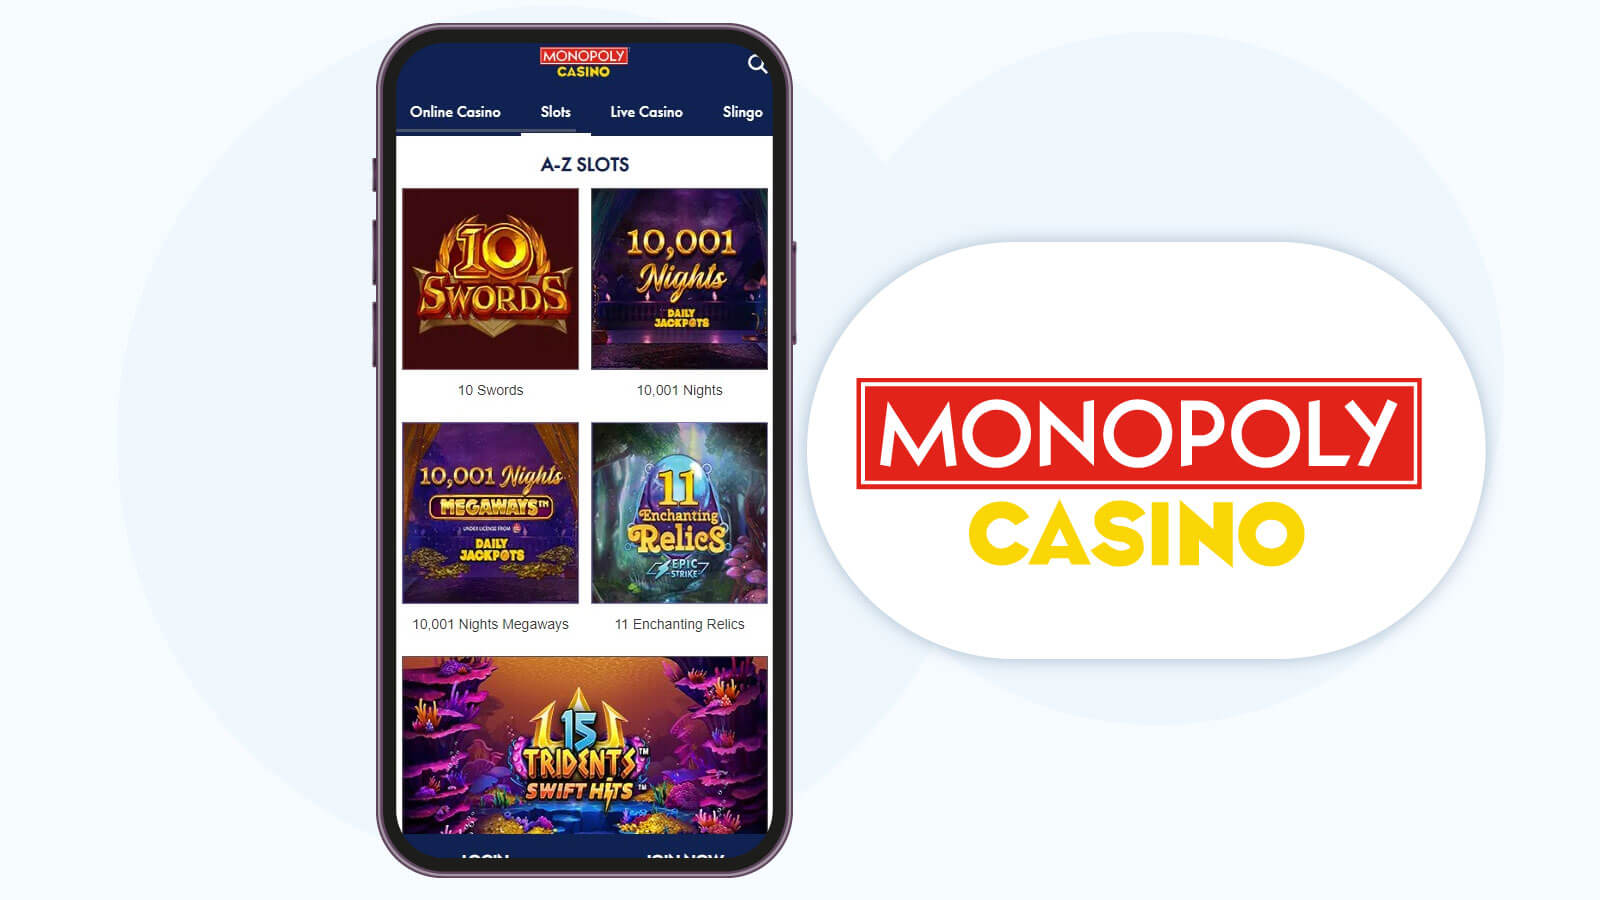 Monopoly casino lobby